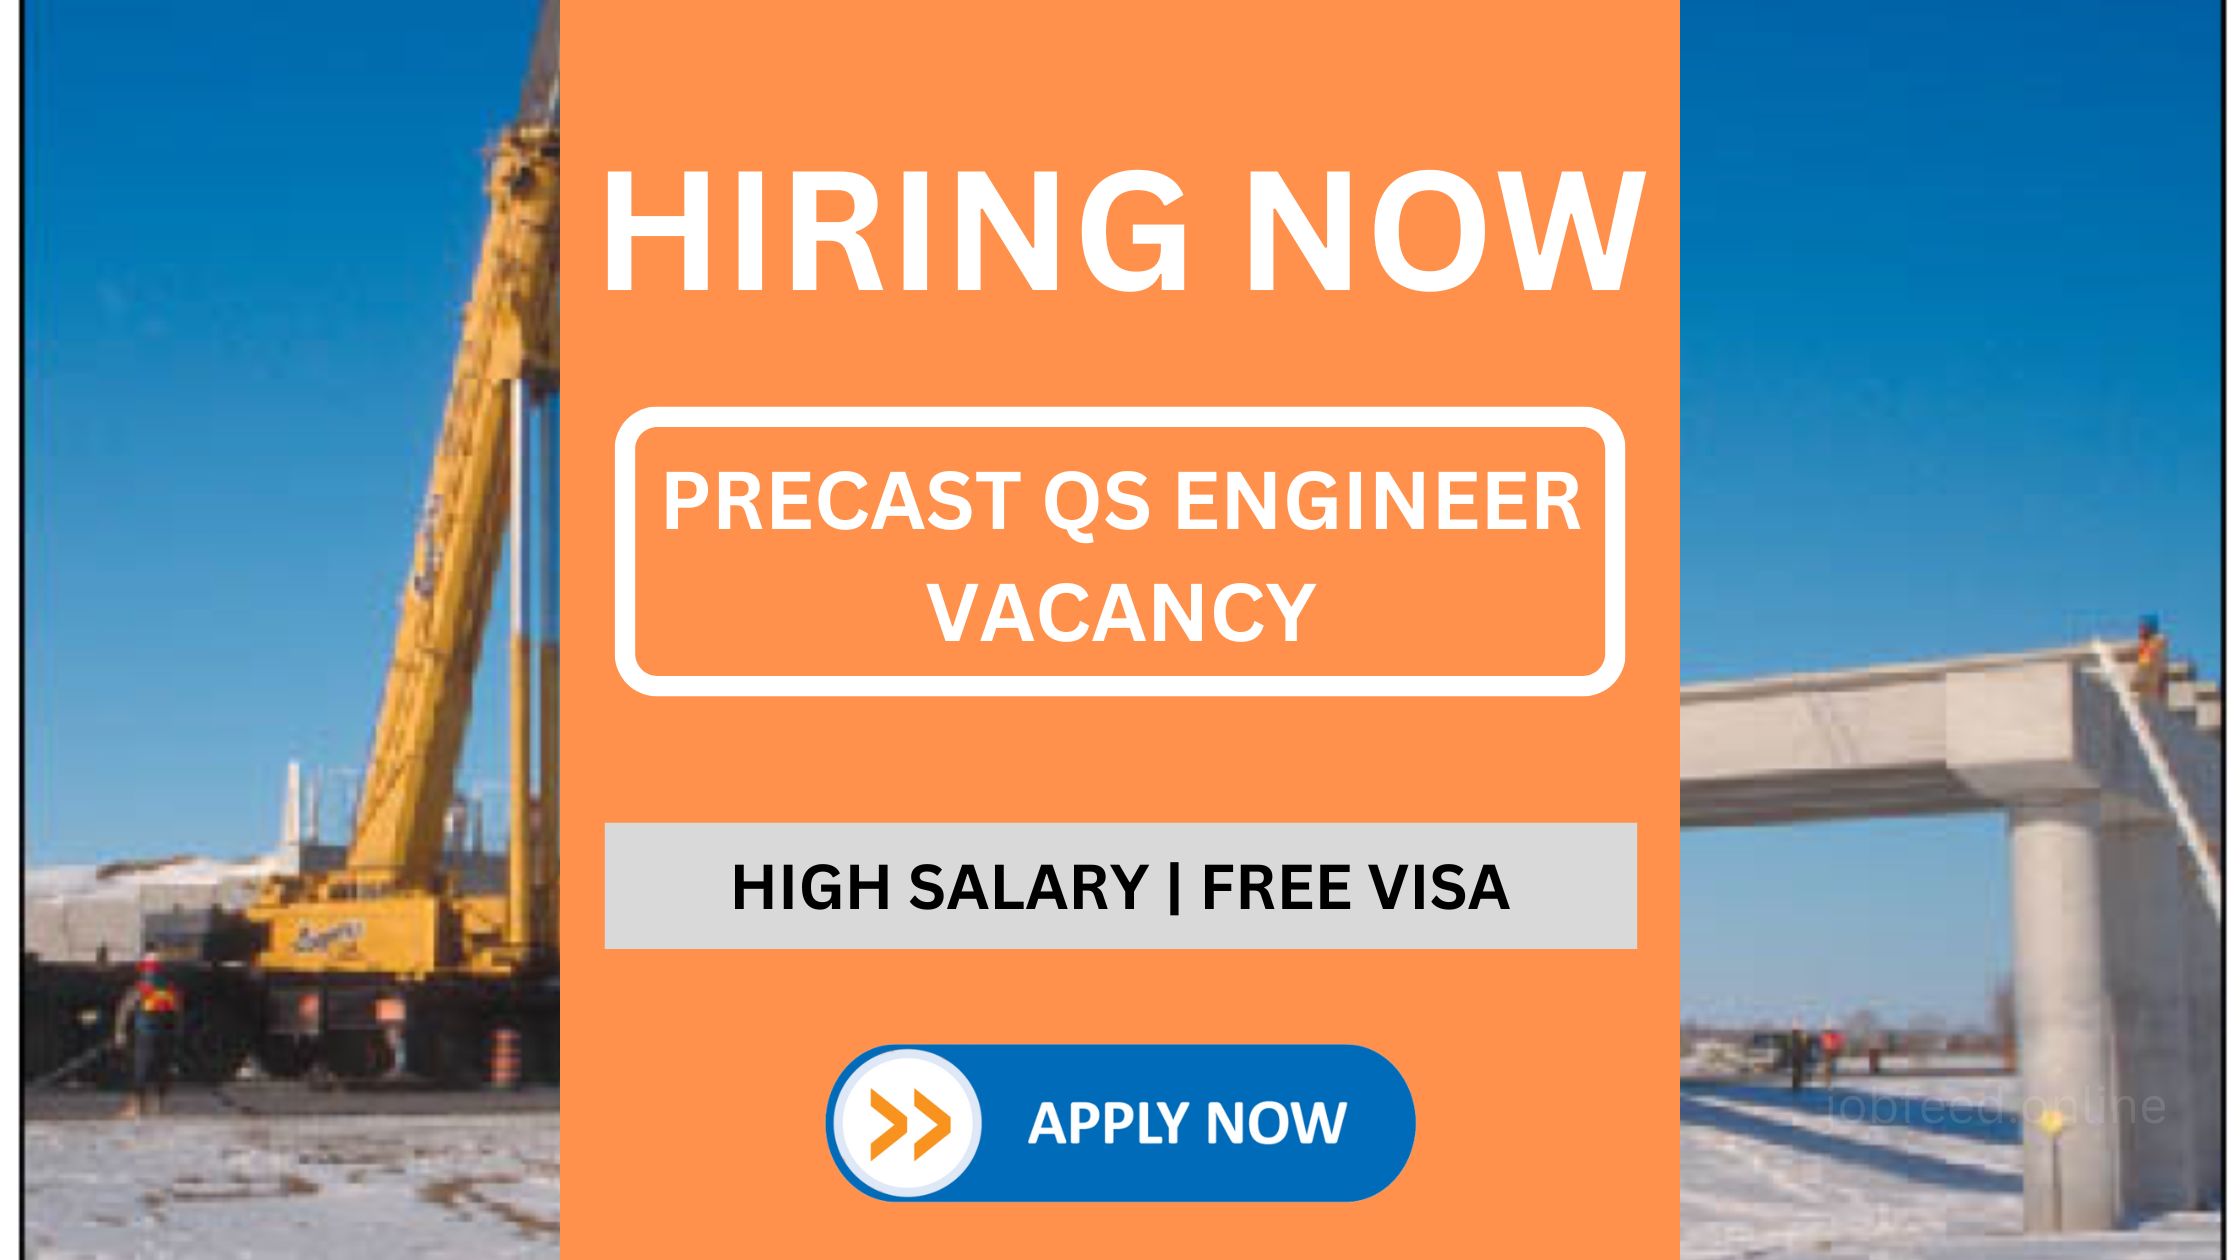 Precast QS انجینئر - تجربہ کار امیدوار درخواست دے سکتے ہیں۔